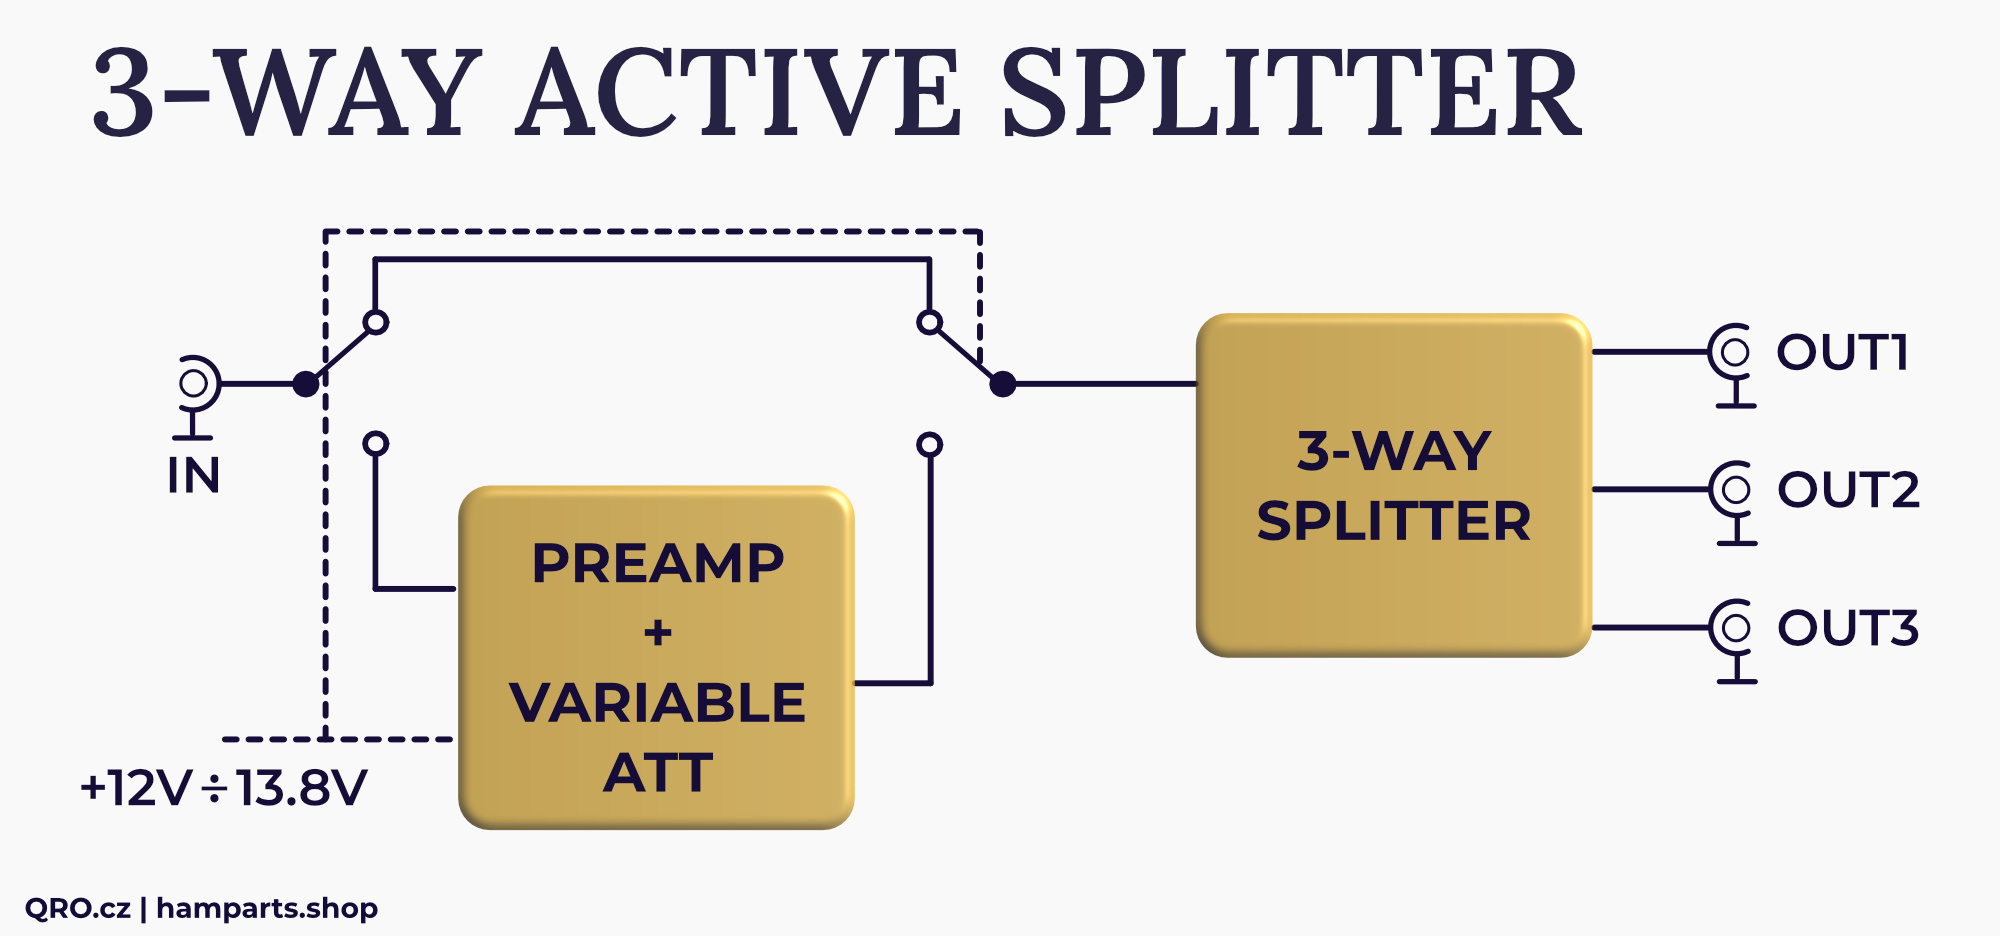 3-way active splitter  by qro.cz hamparts.shop